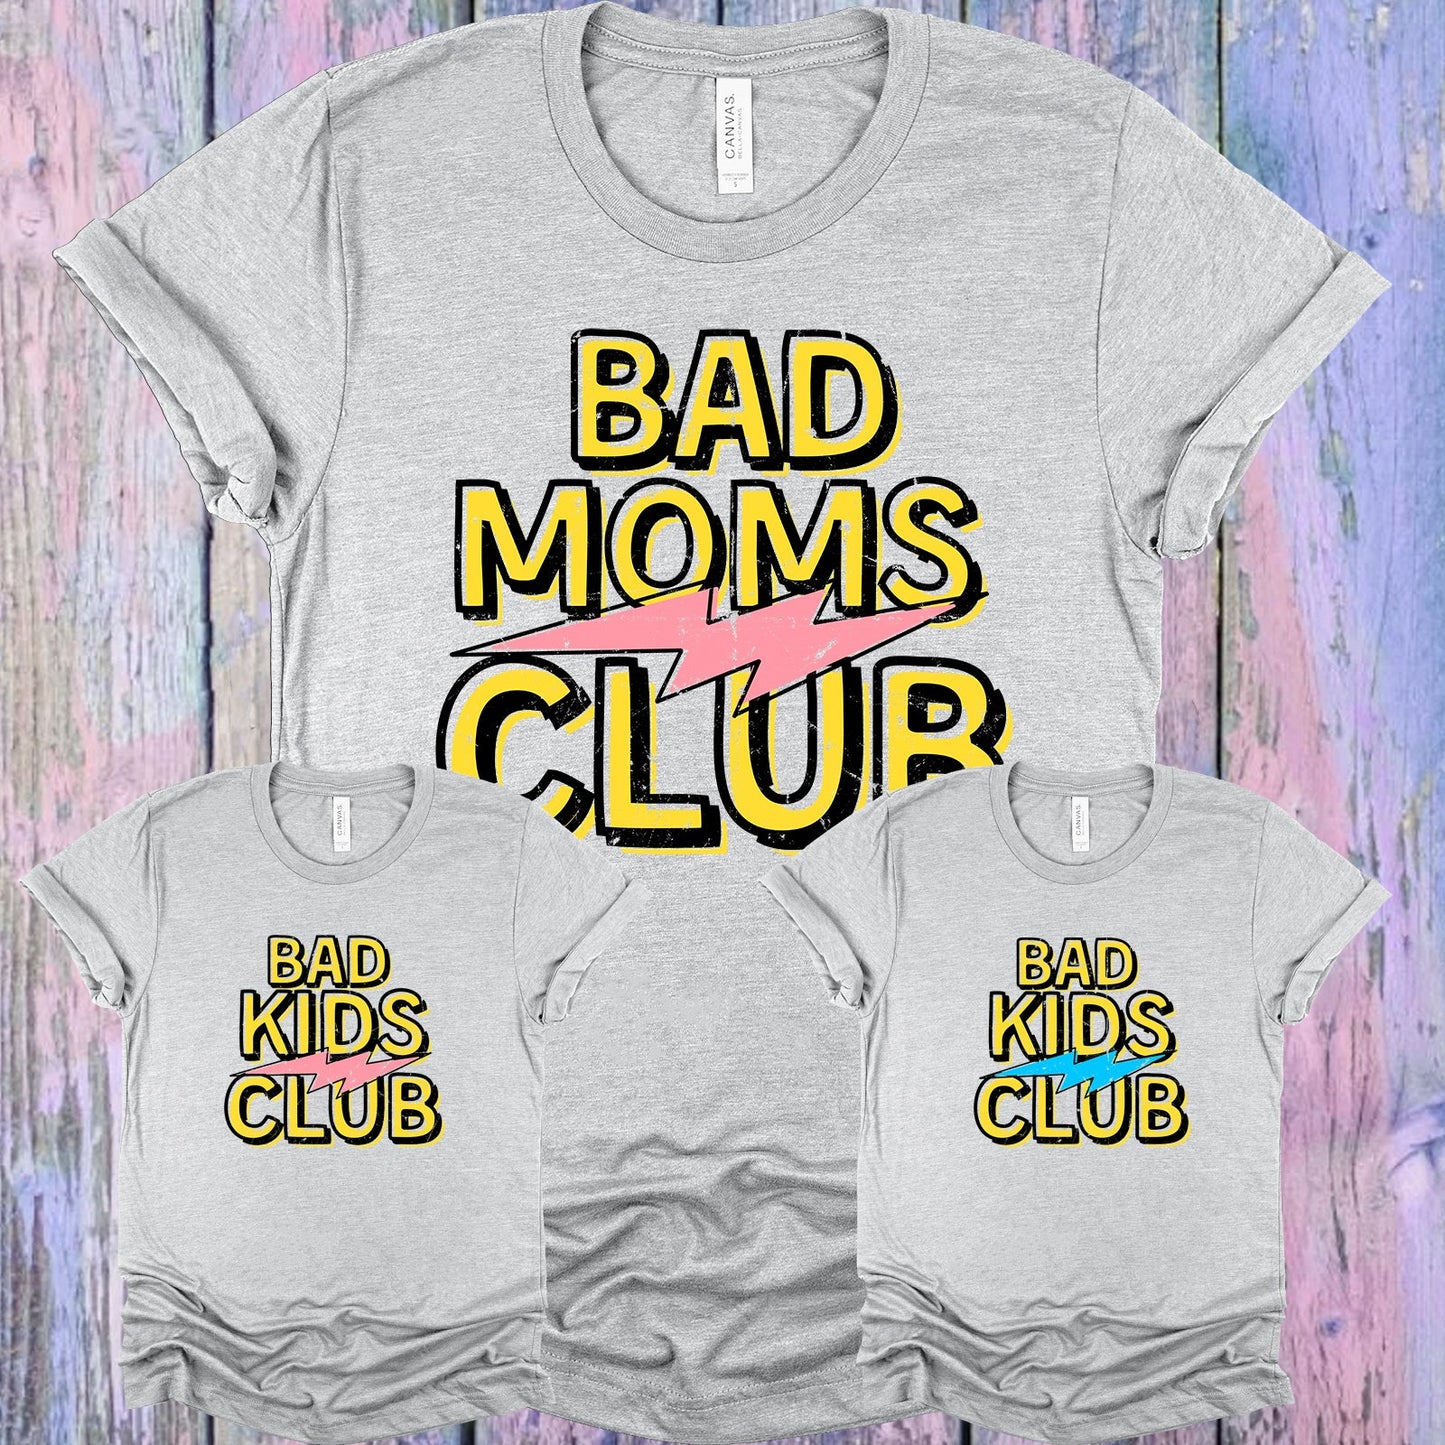 Bad Kids Club (Pink) Graphic Tee Graphic Tee